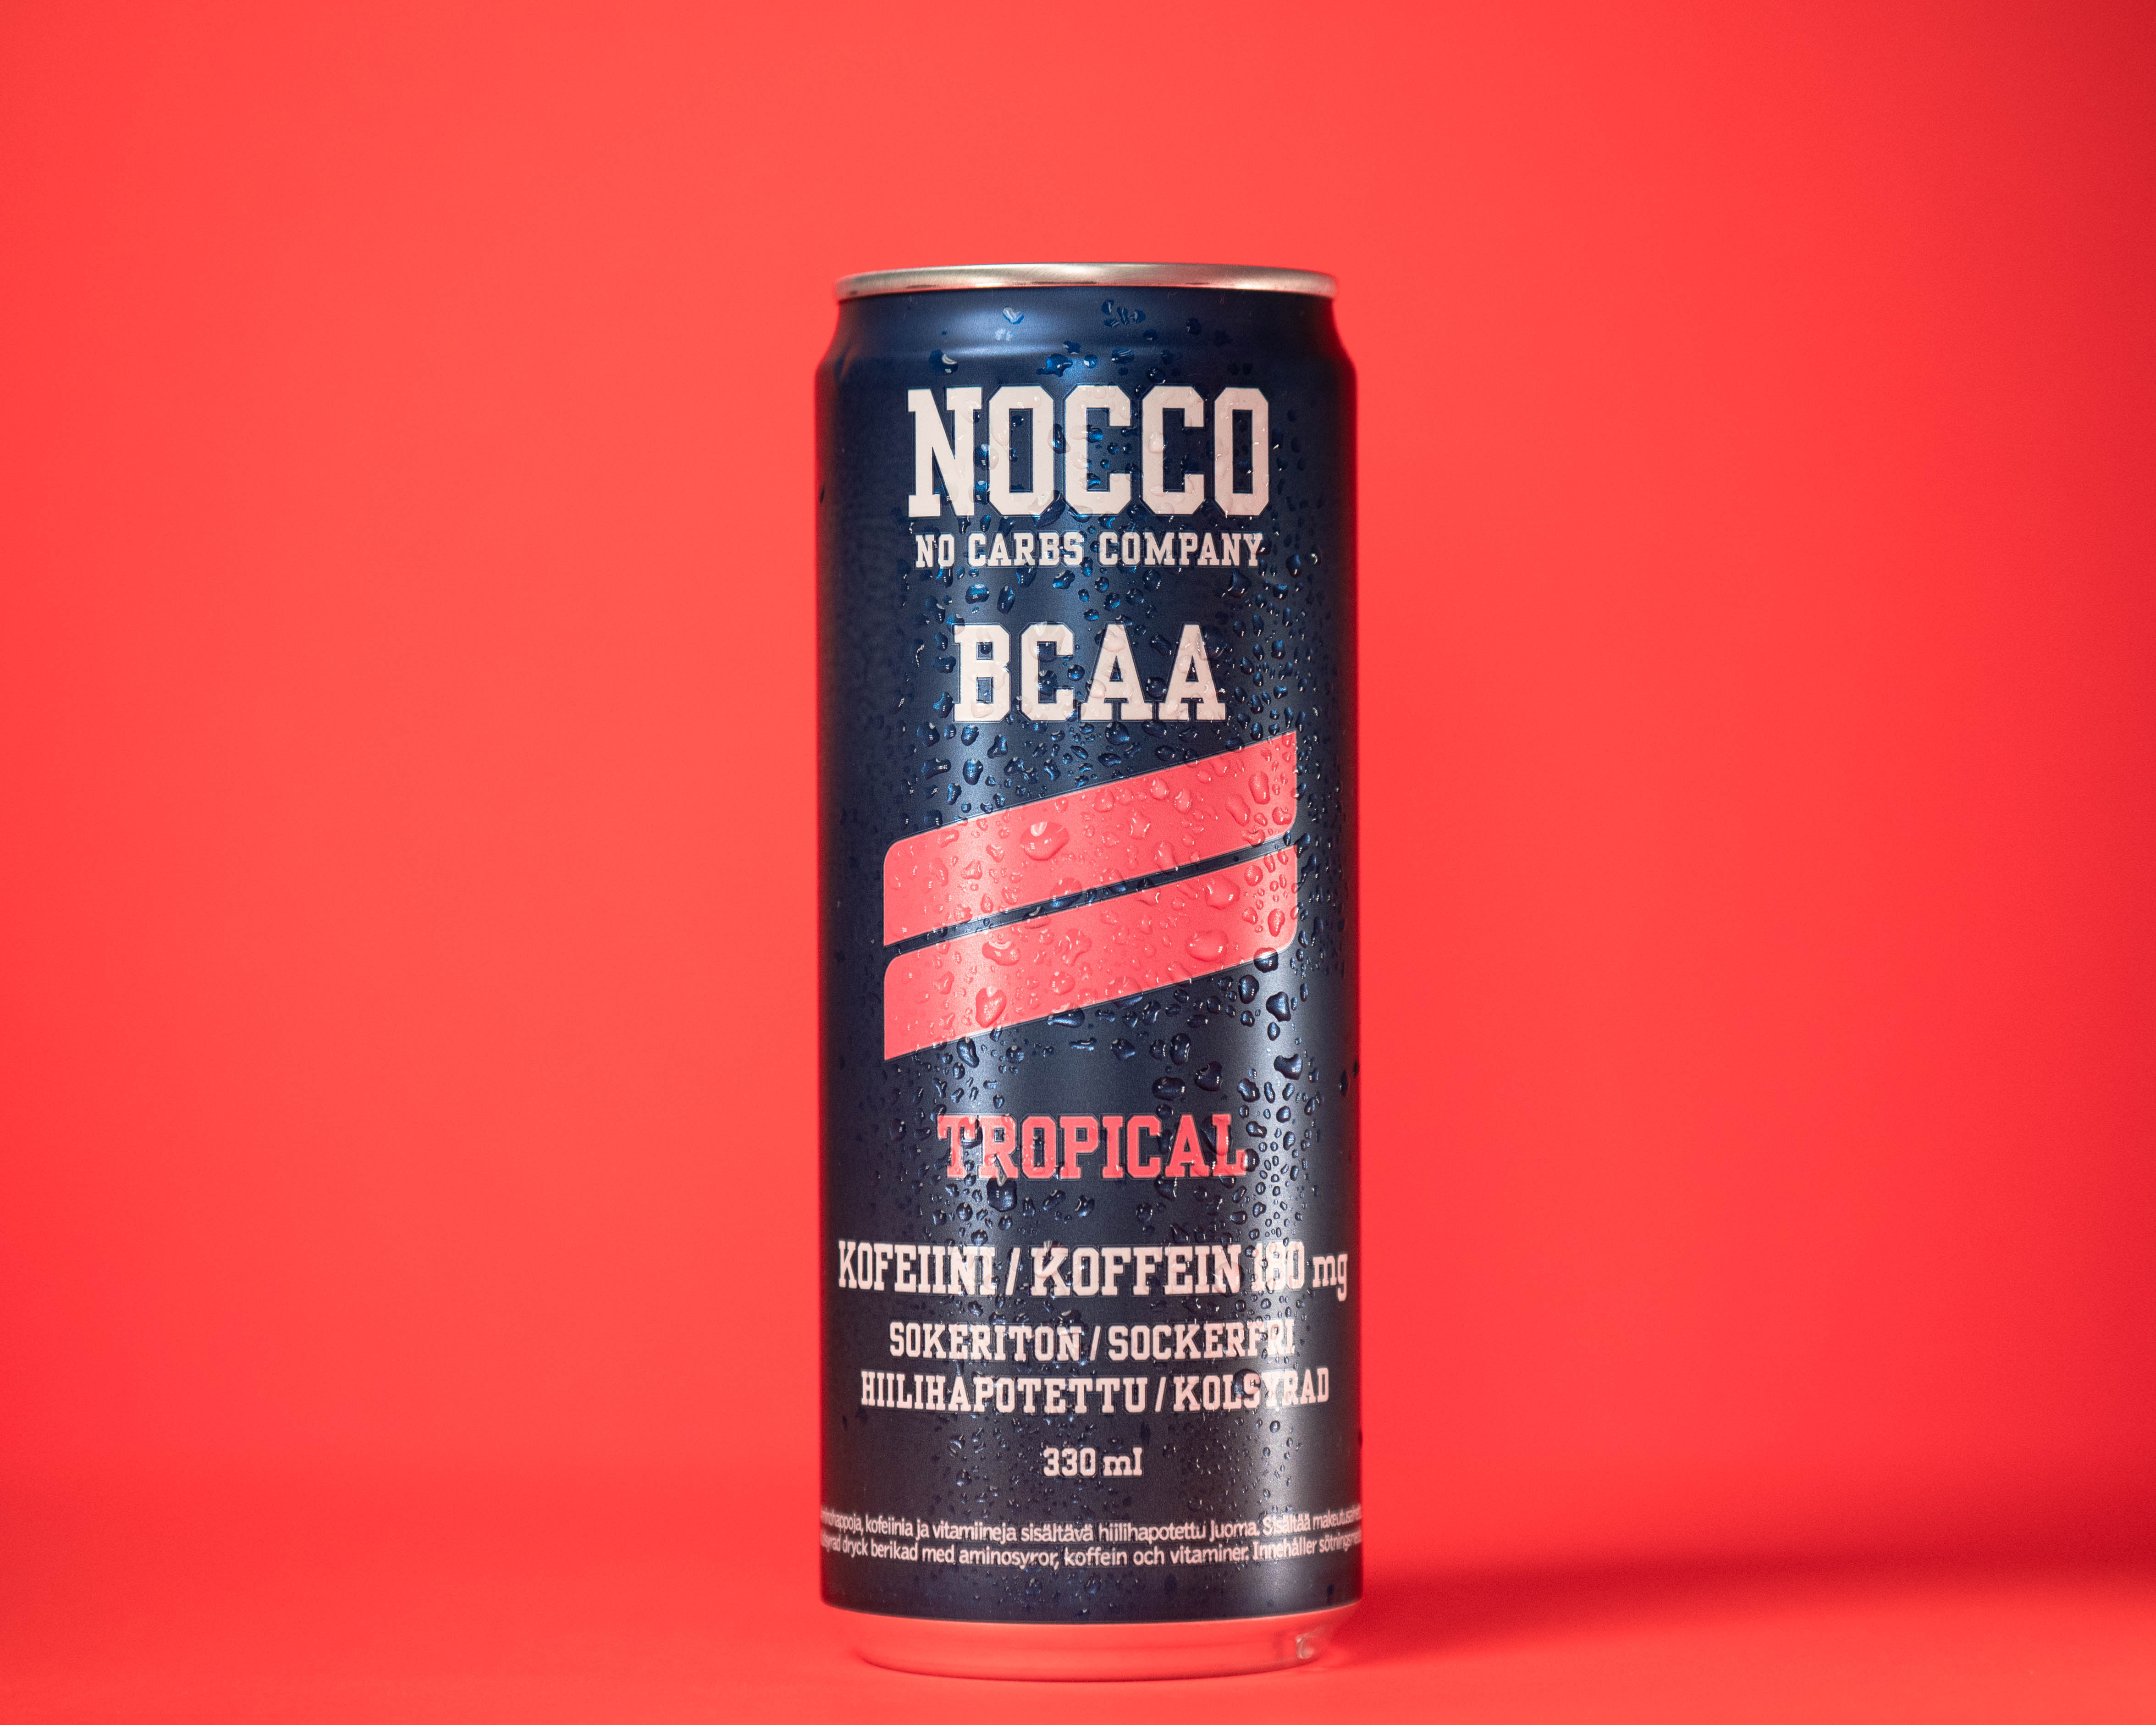 Nocco tropical BCAA can